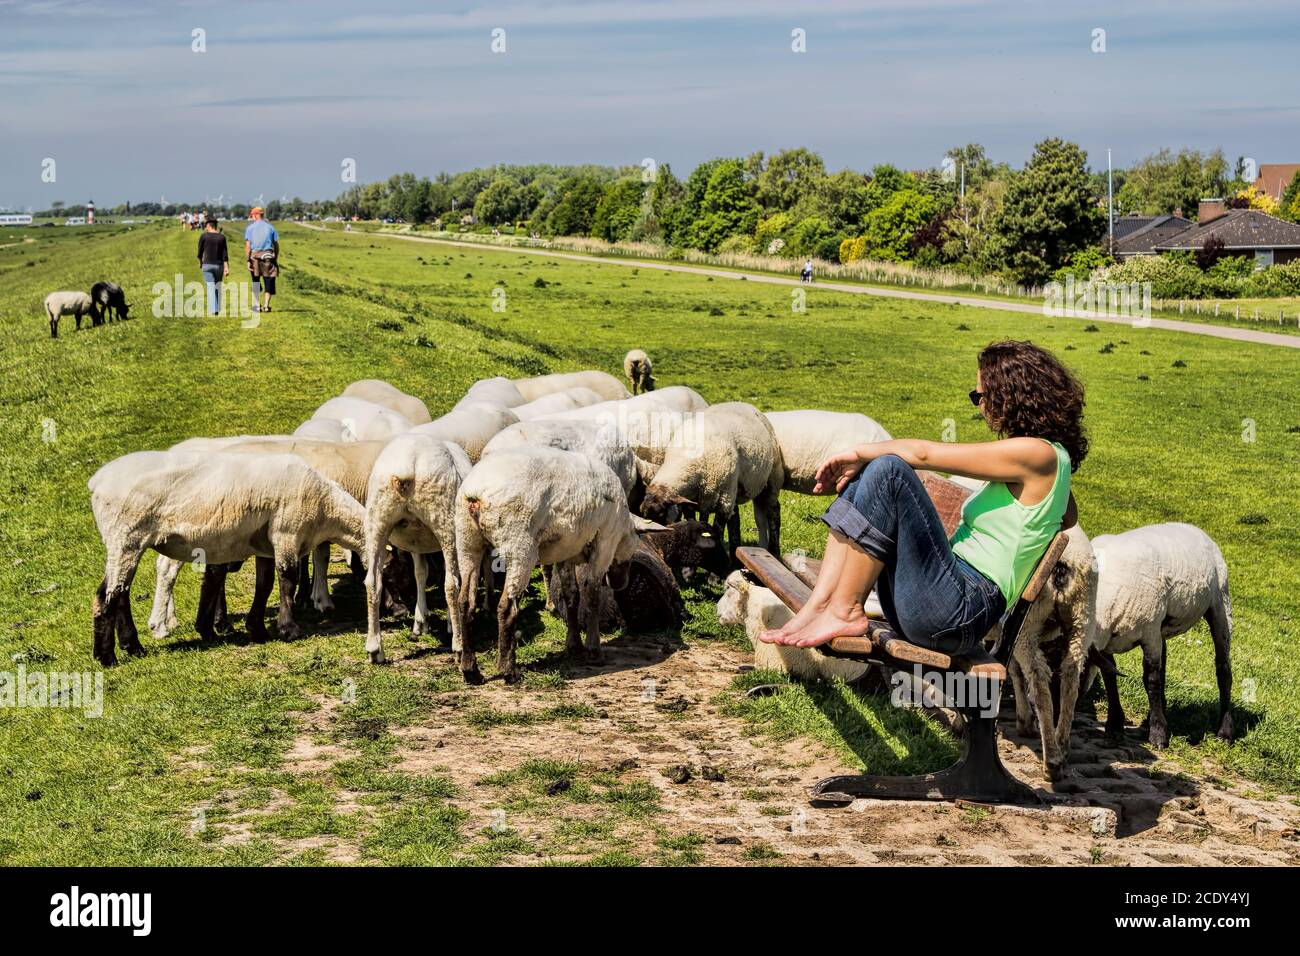 Idyll with sheep in Glückstadt, Germany Stock Photo